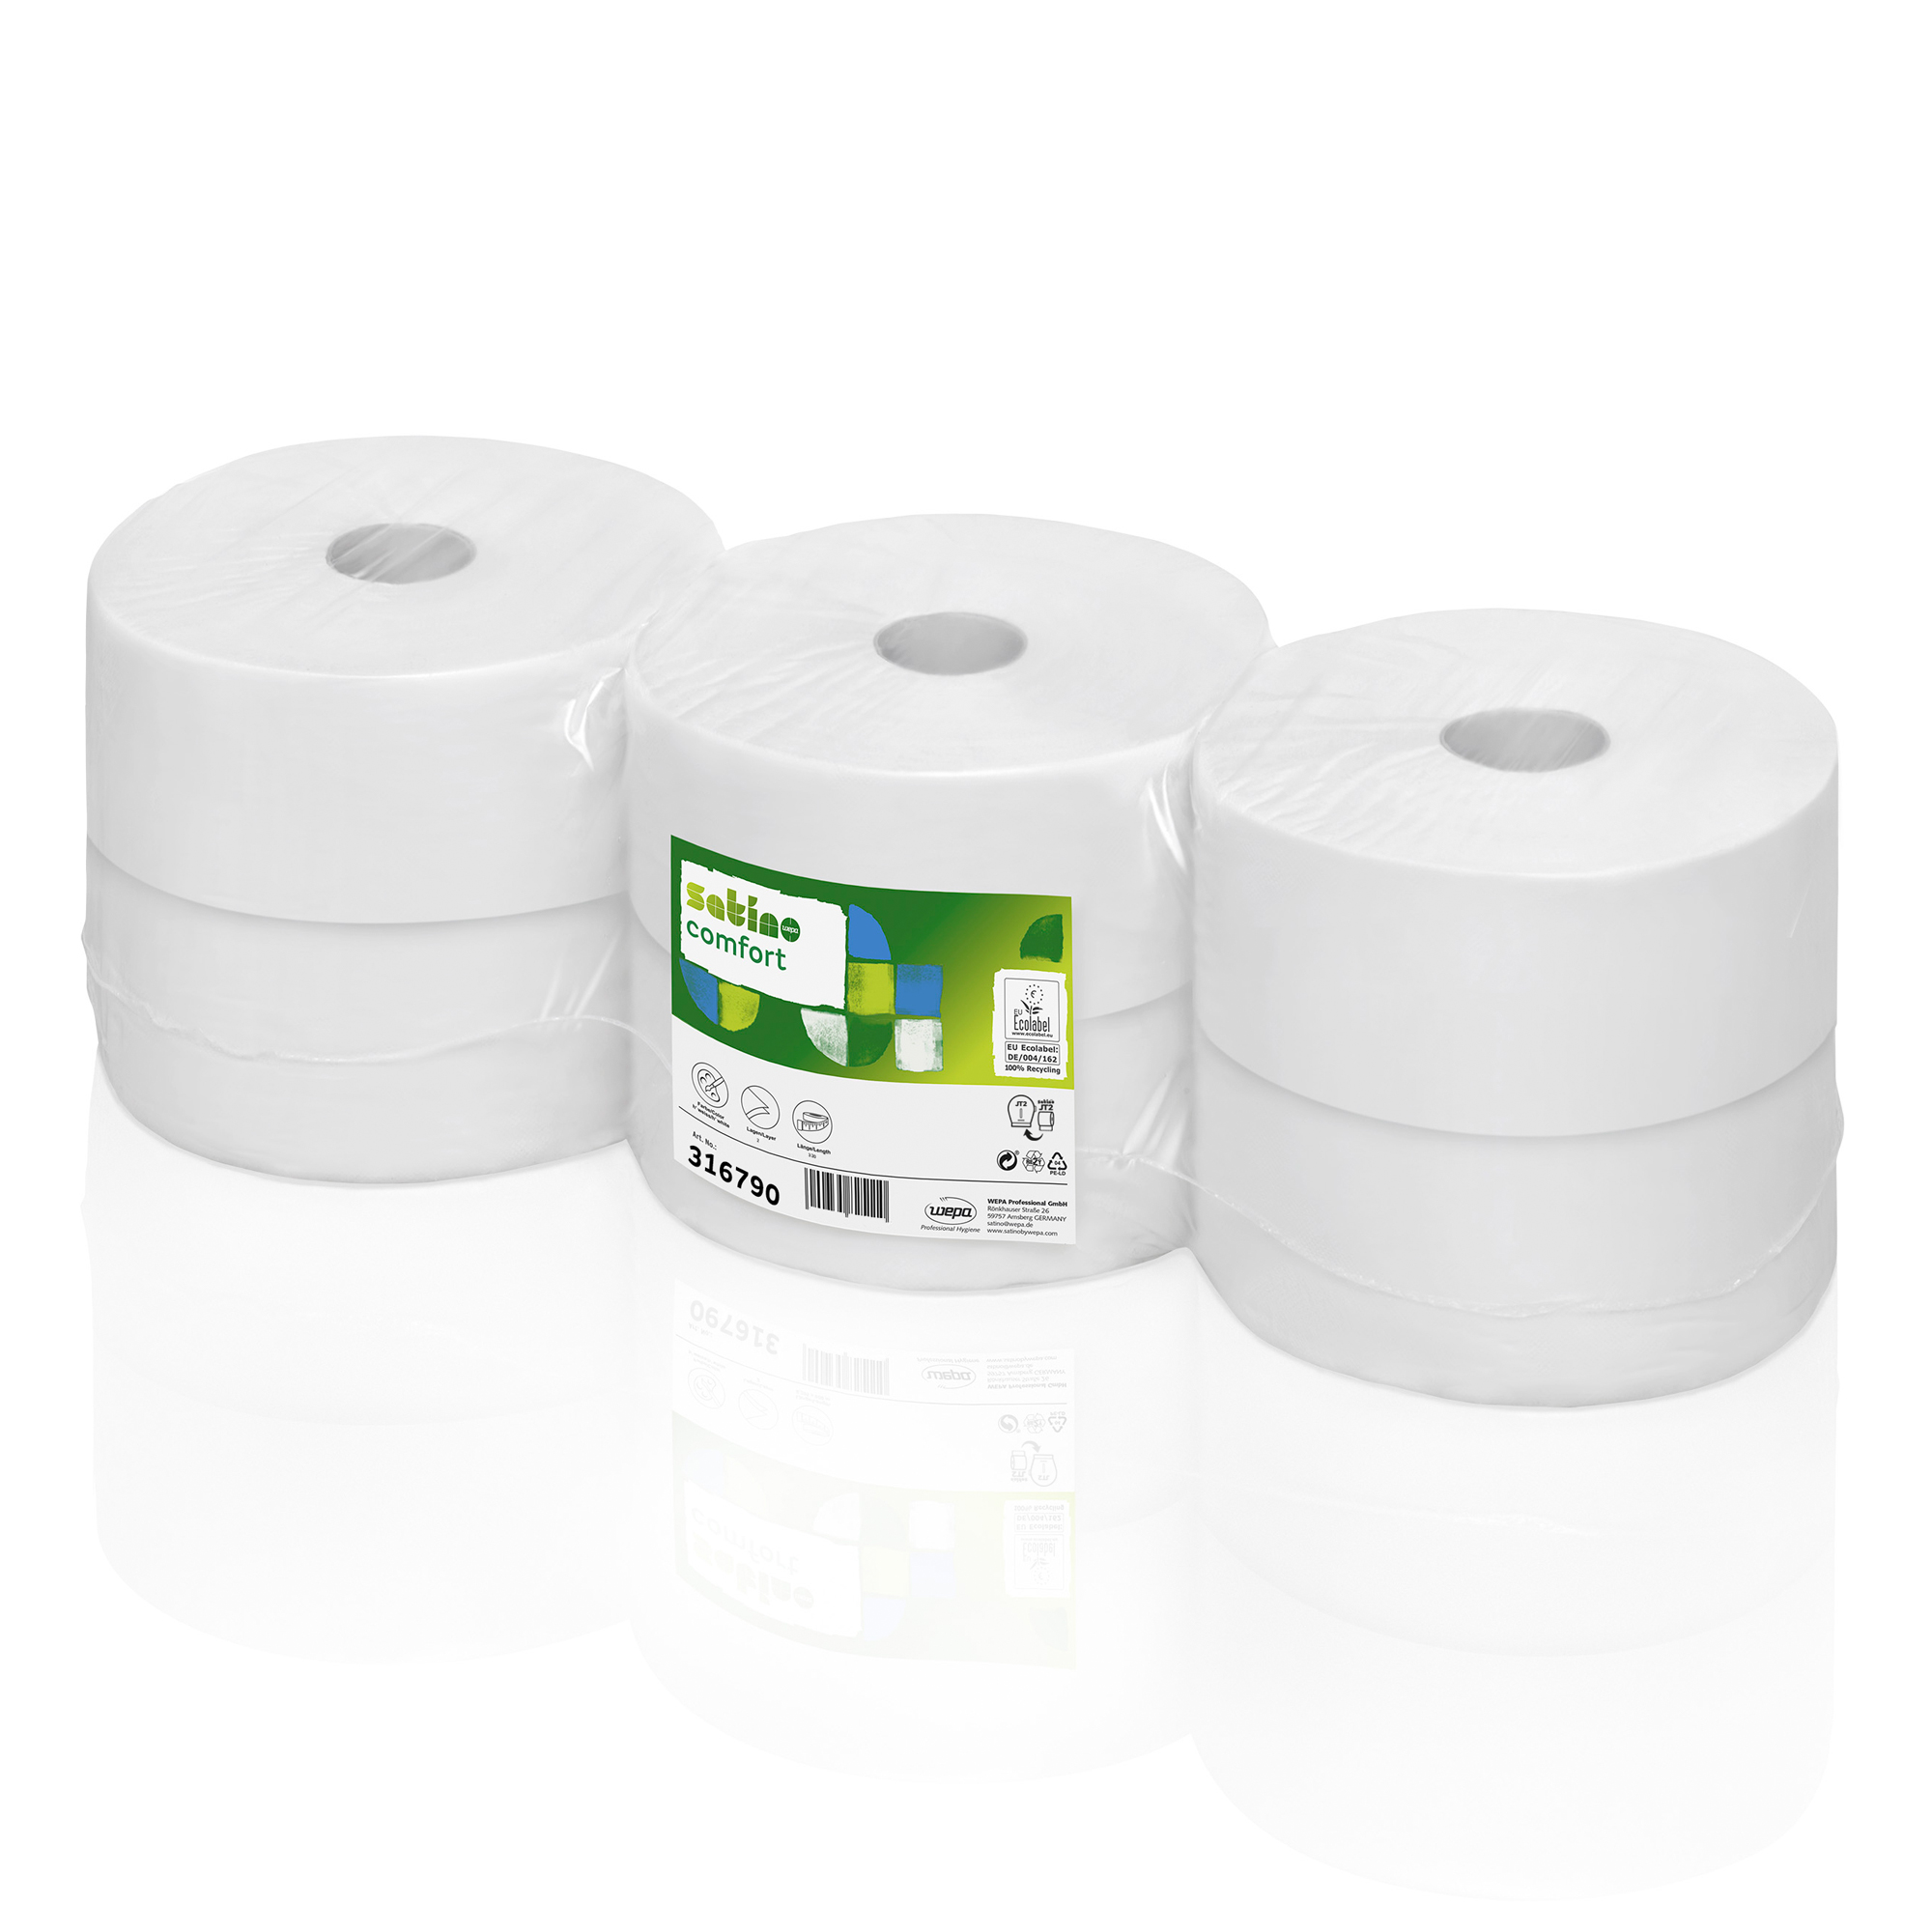 Satino by Wepa comfort Toilettenpapier Maxi Jumbo hochweiß 2-lagig, 320 Meter 6 Rollen 316790_1